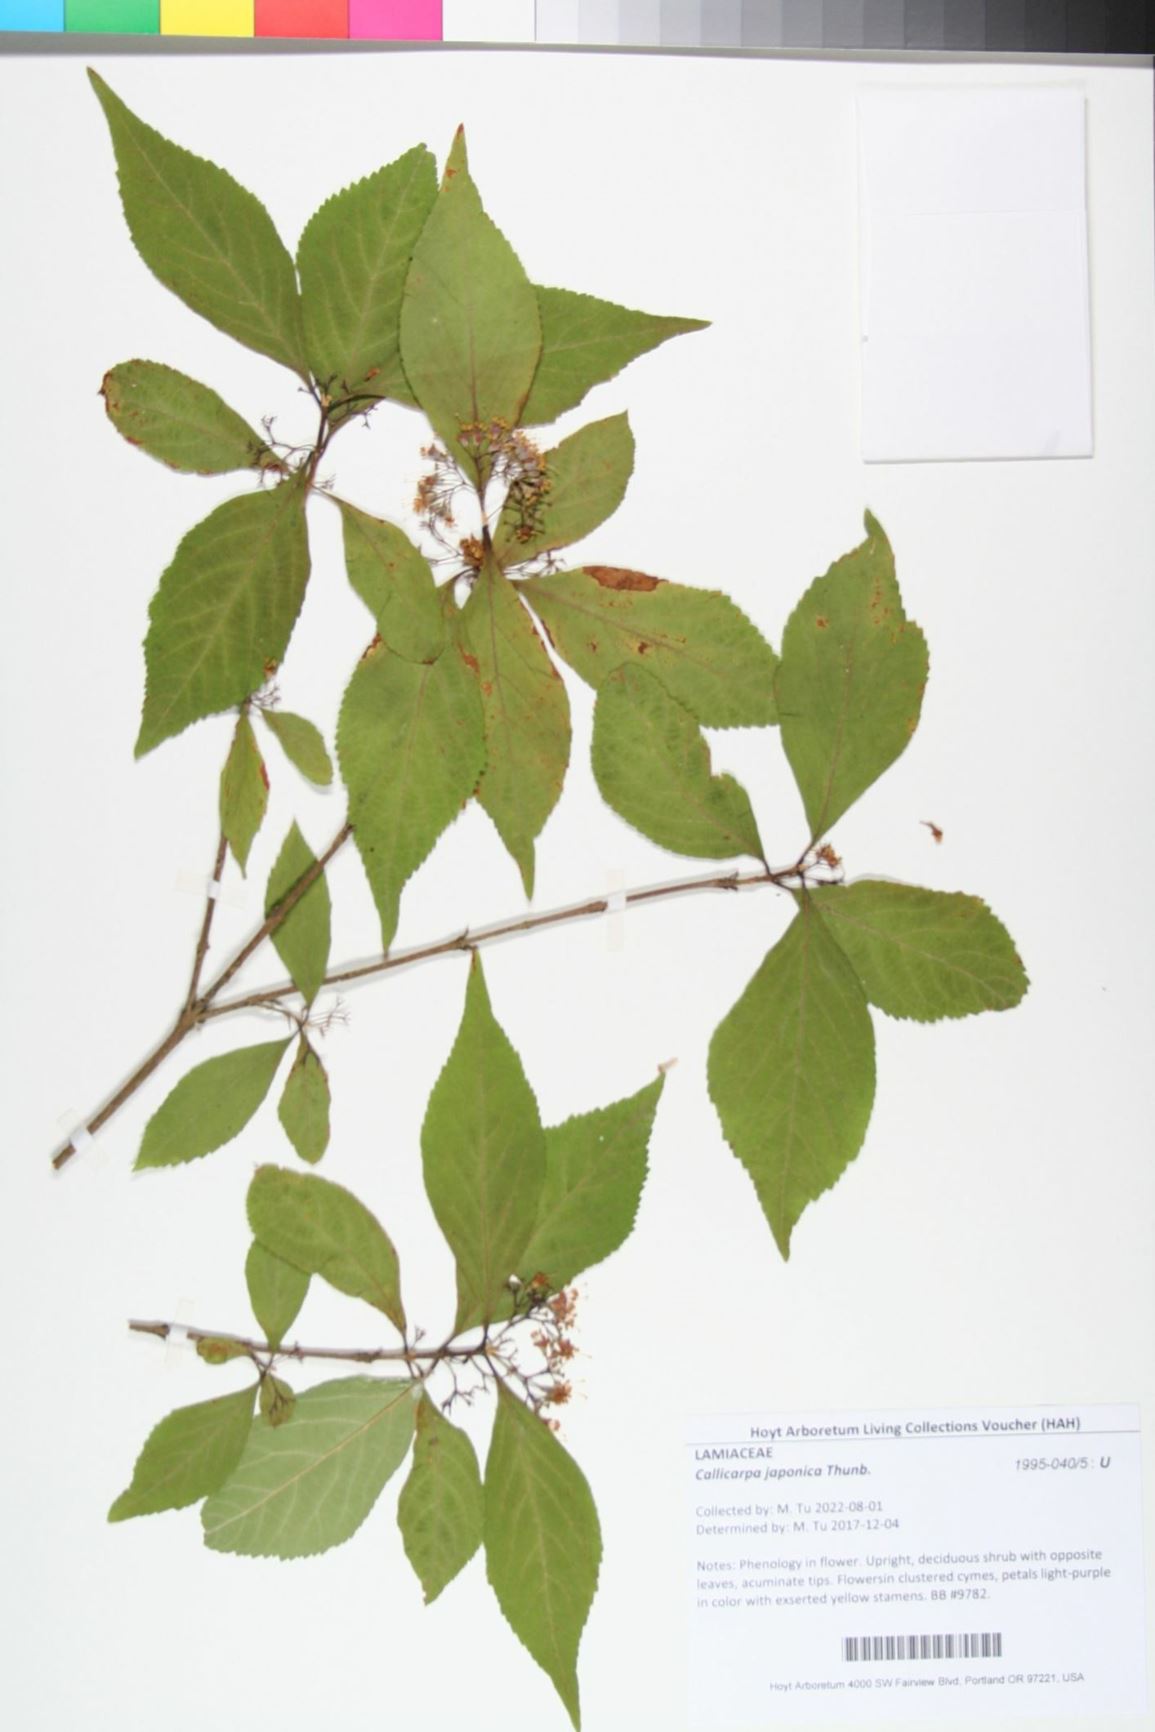 Callicarpa japonica - Japanese beautyberry